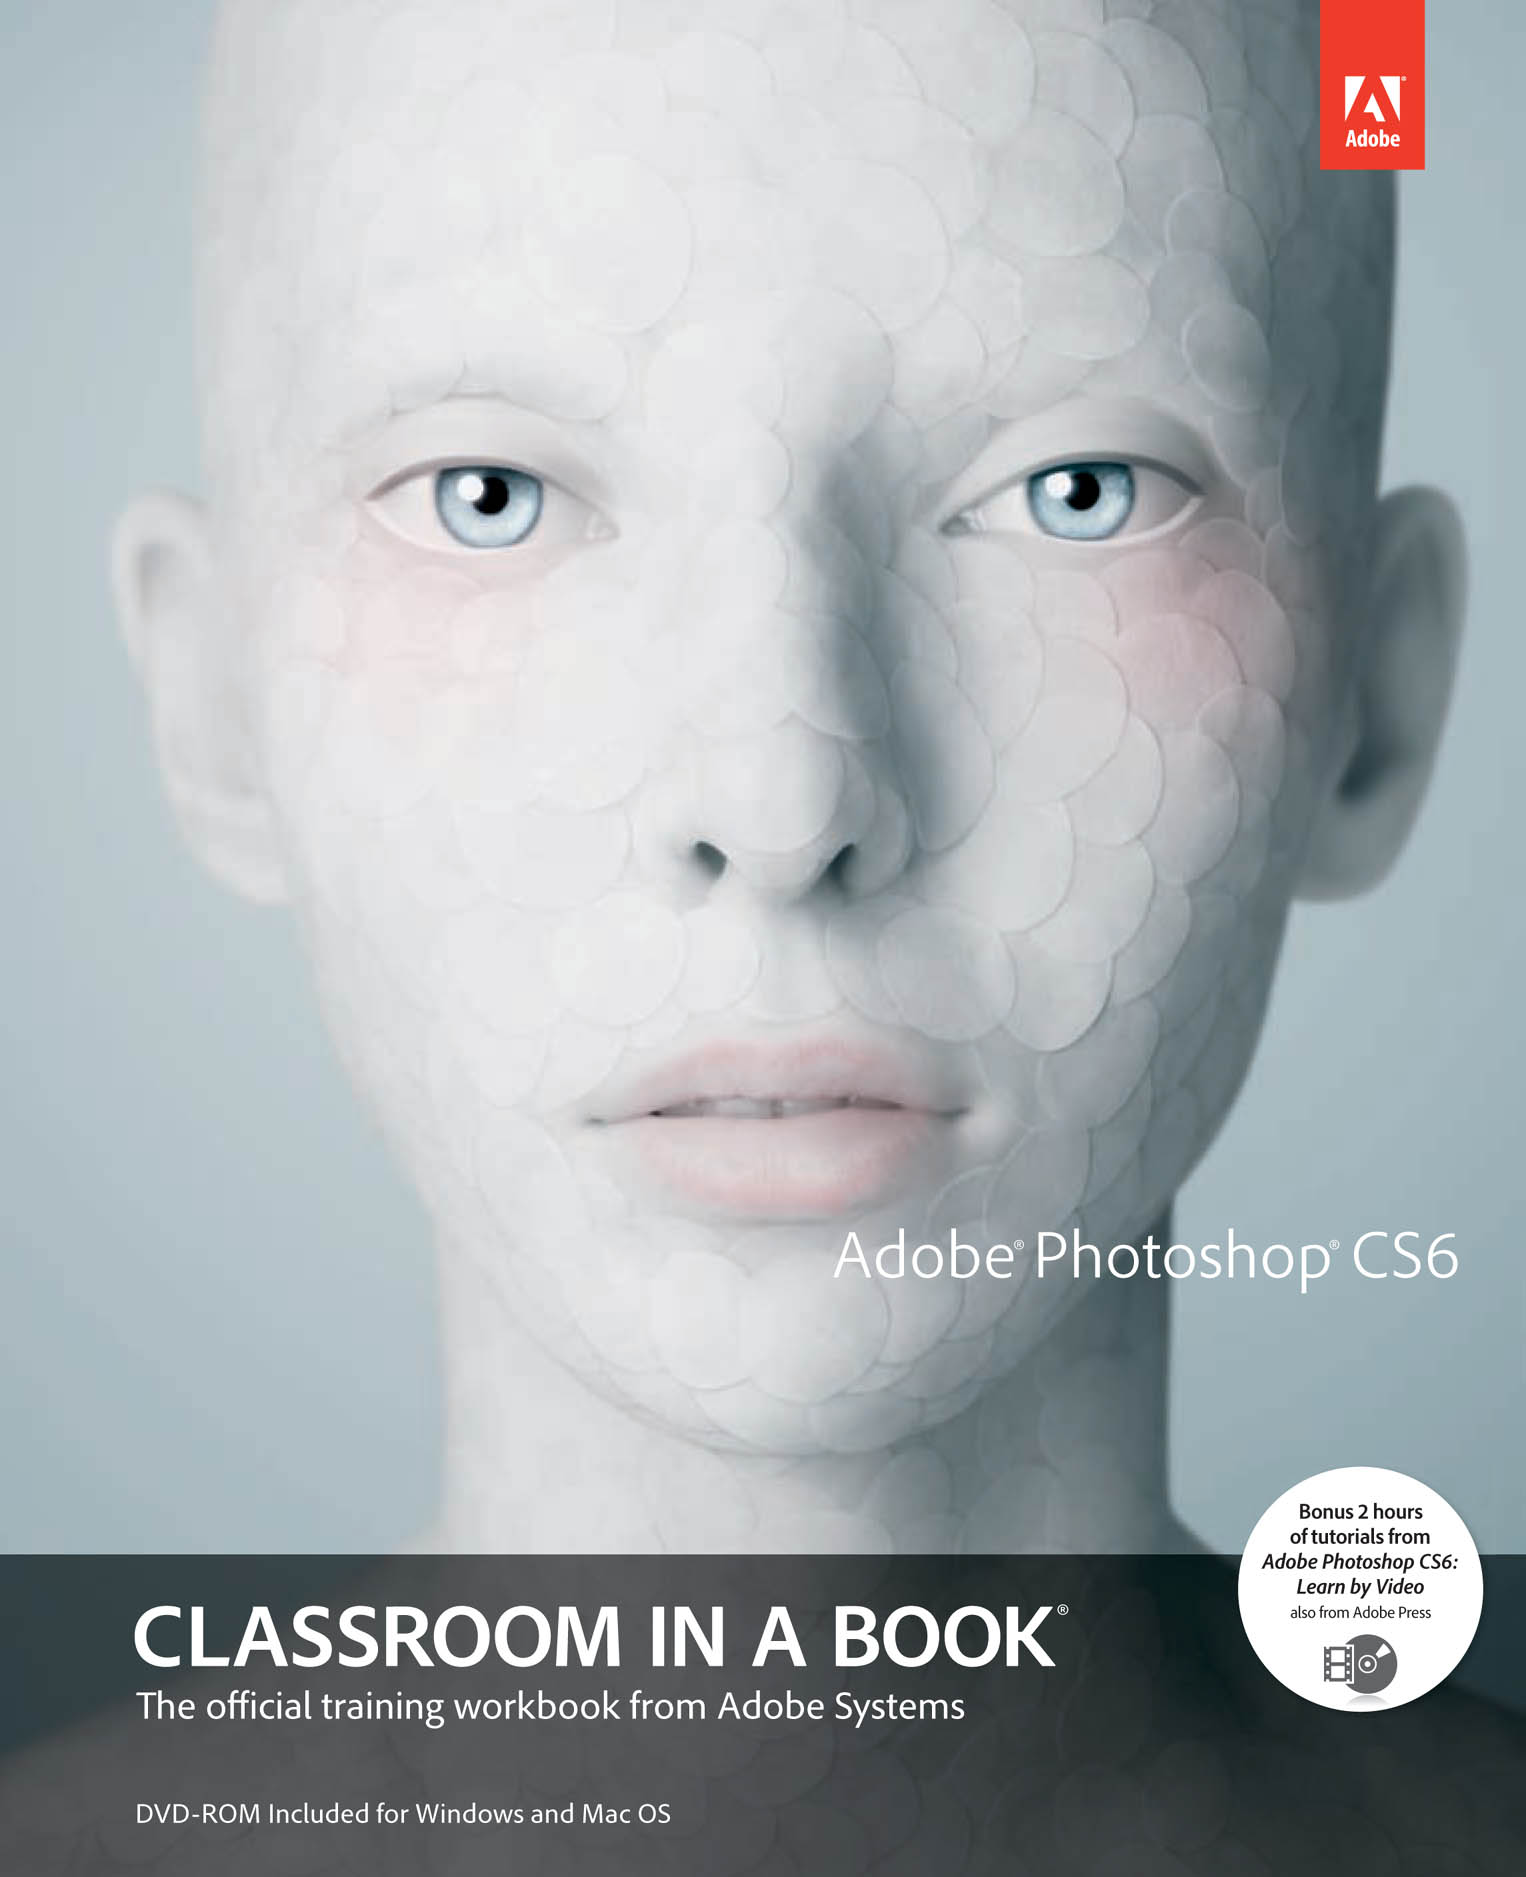 Adobe Photoshop CS6 Classroom in a Book - 25-49.99